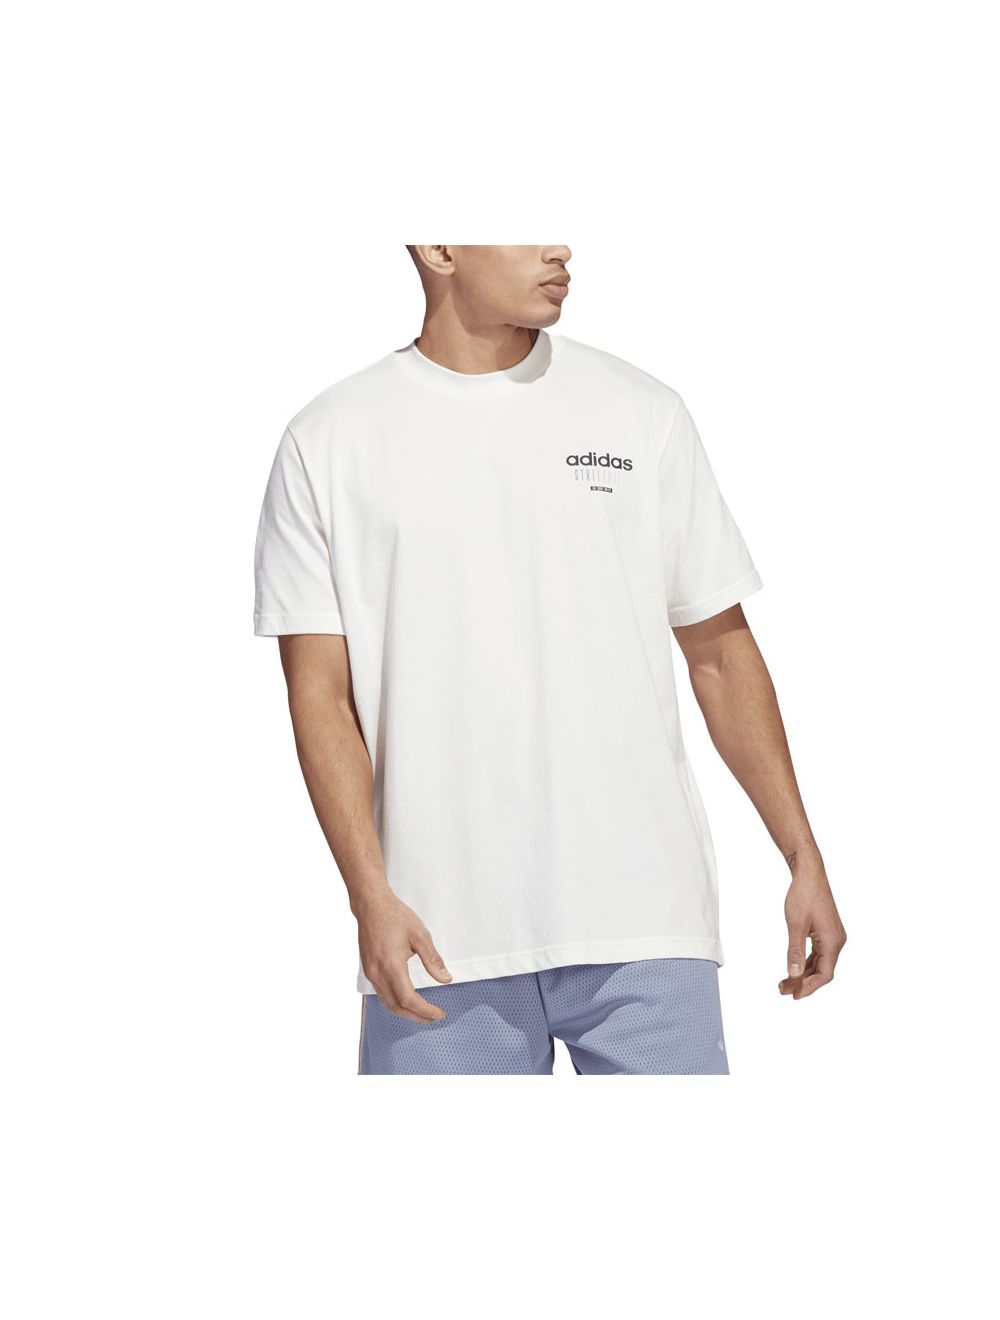 T-shirt Originals Basketball White Graphic Streetball Mens adidas